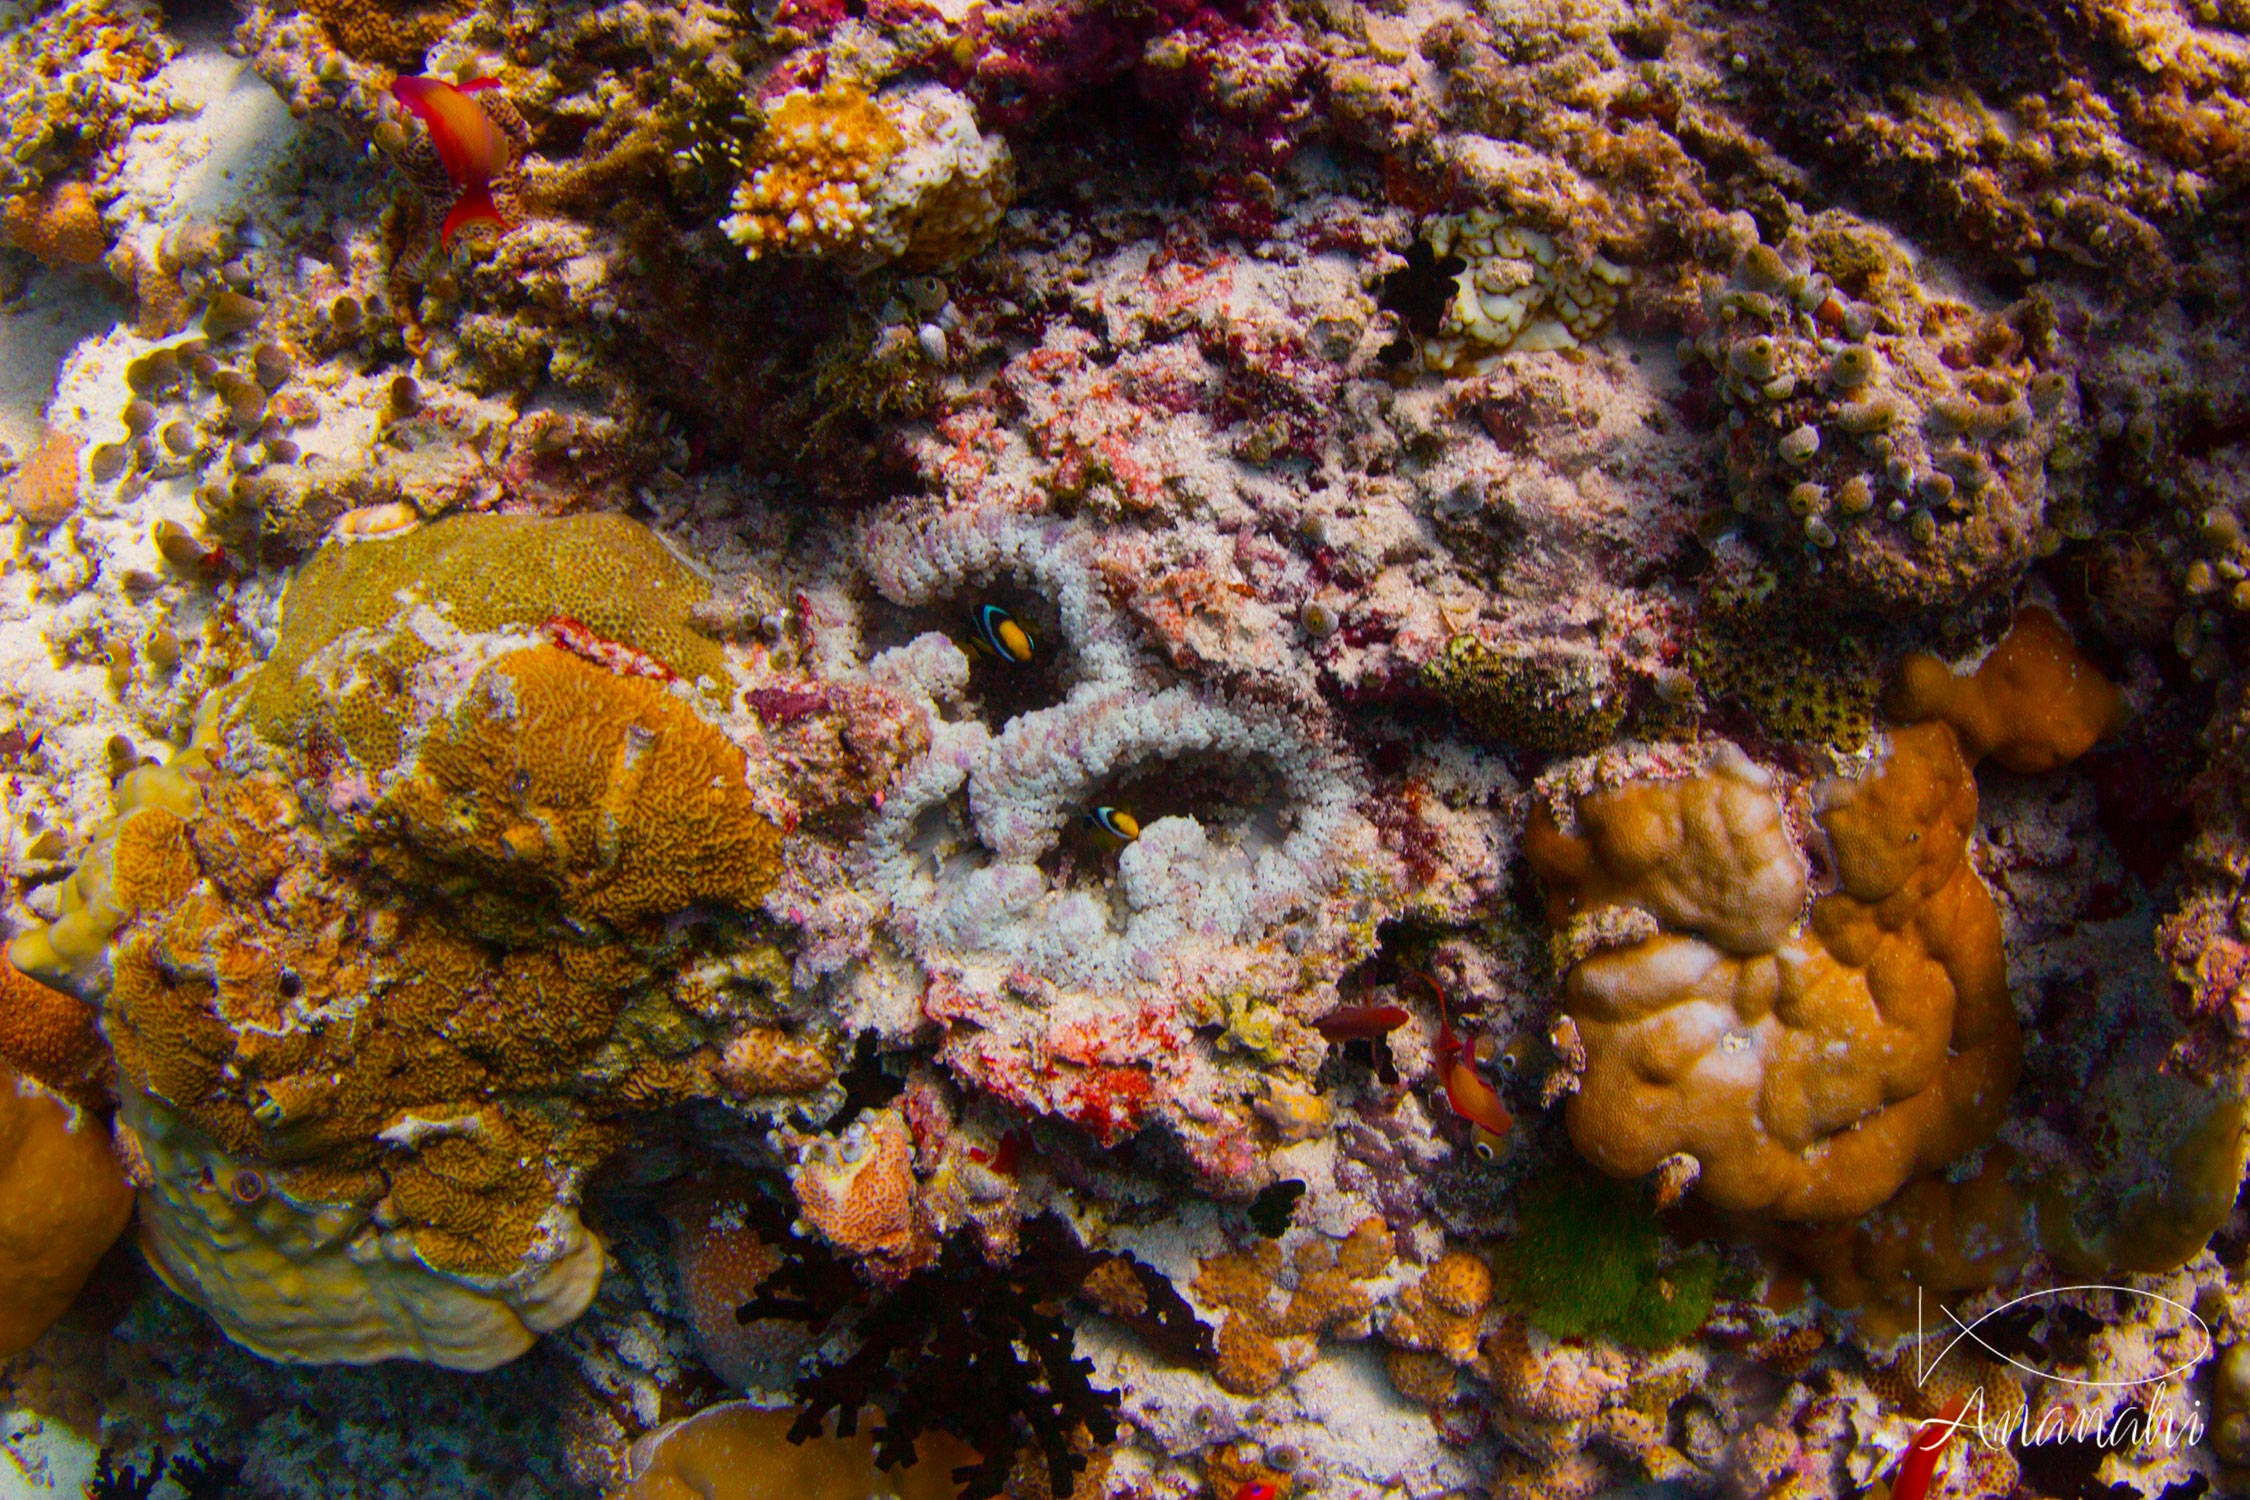 Beaded sea anemone of Maldives